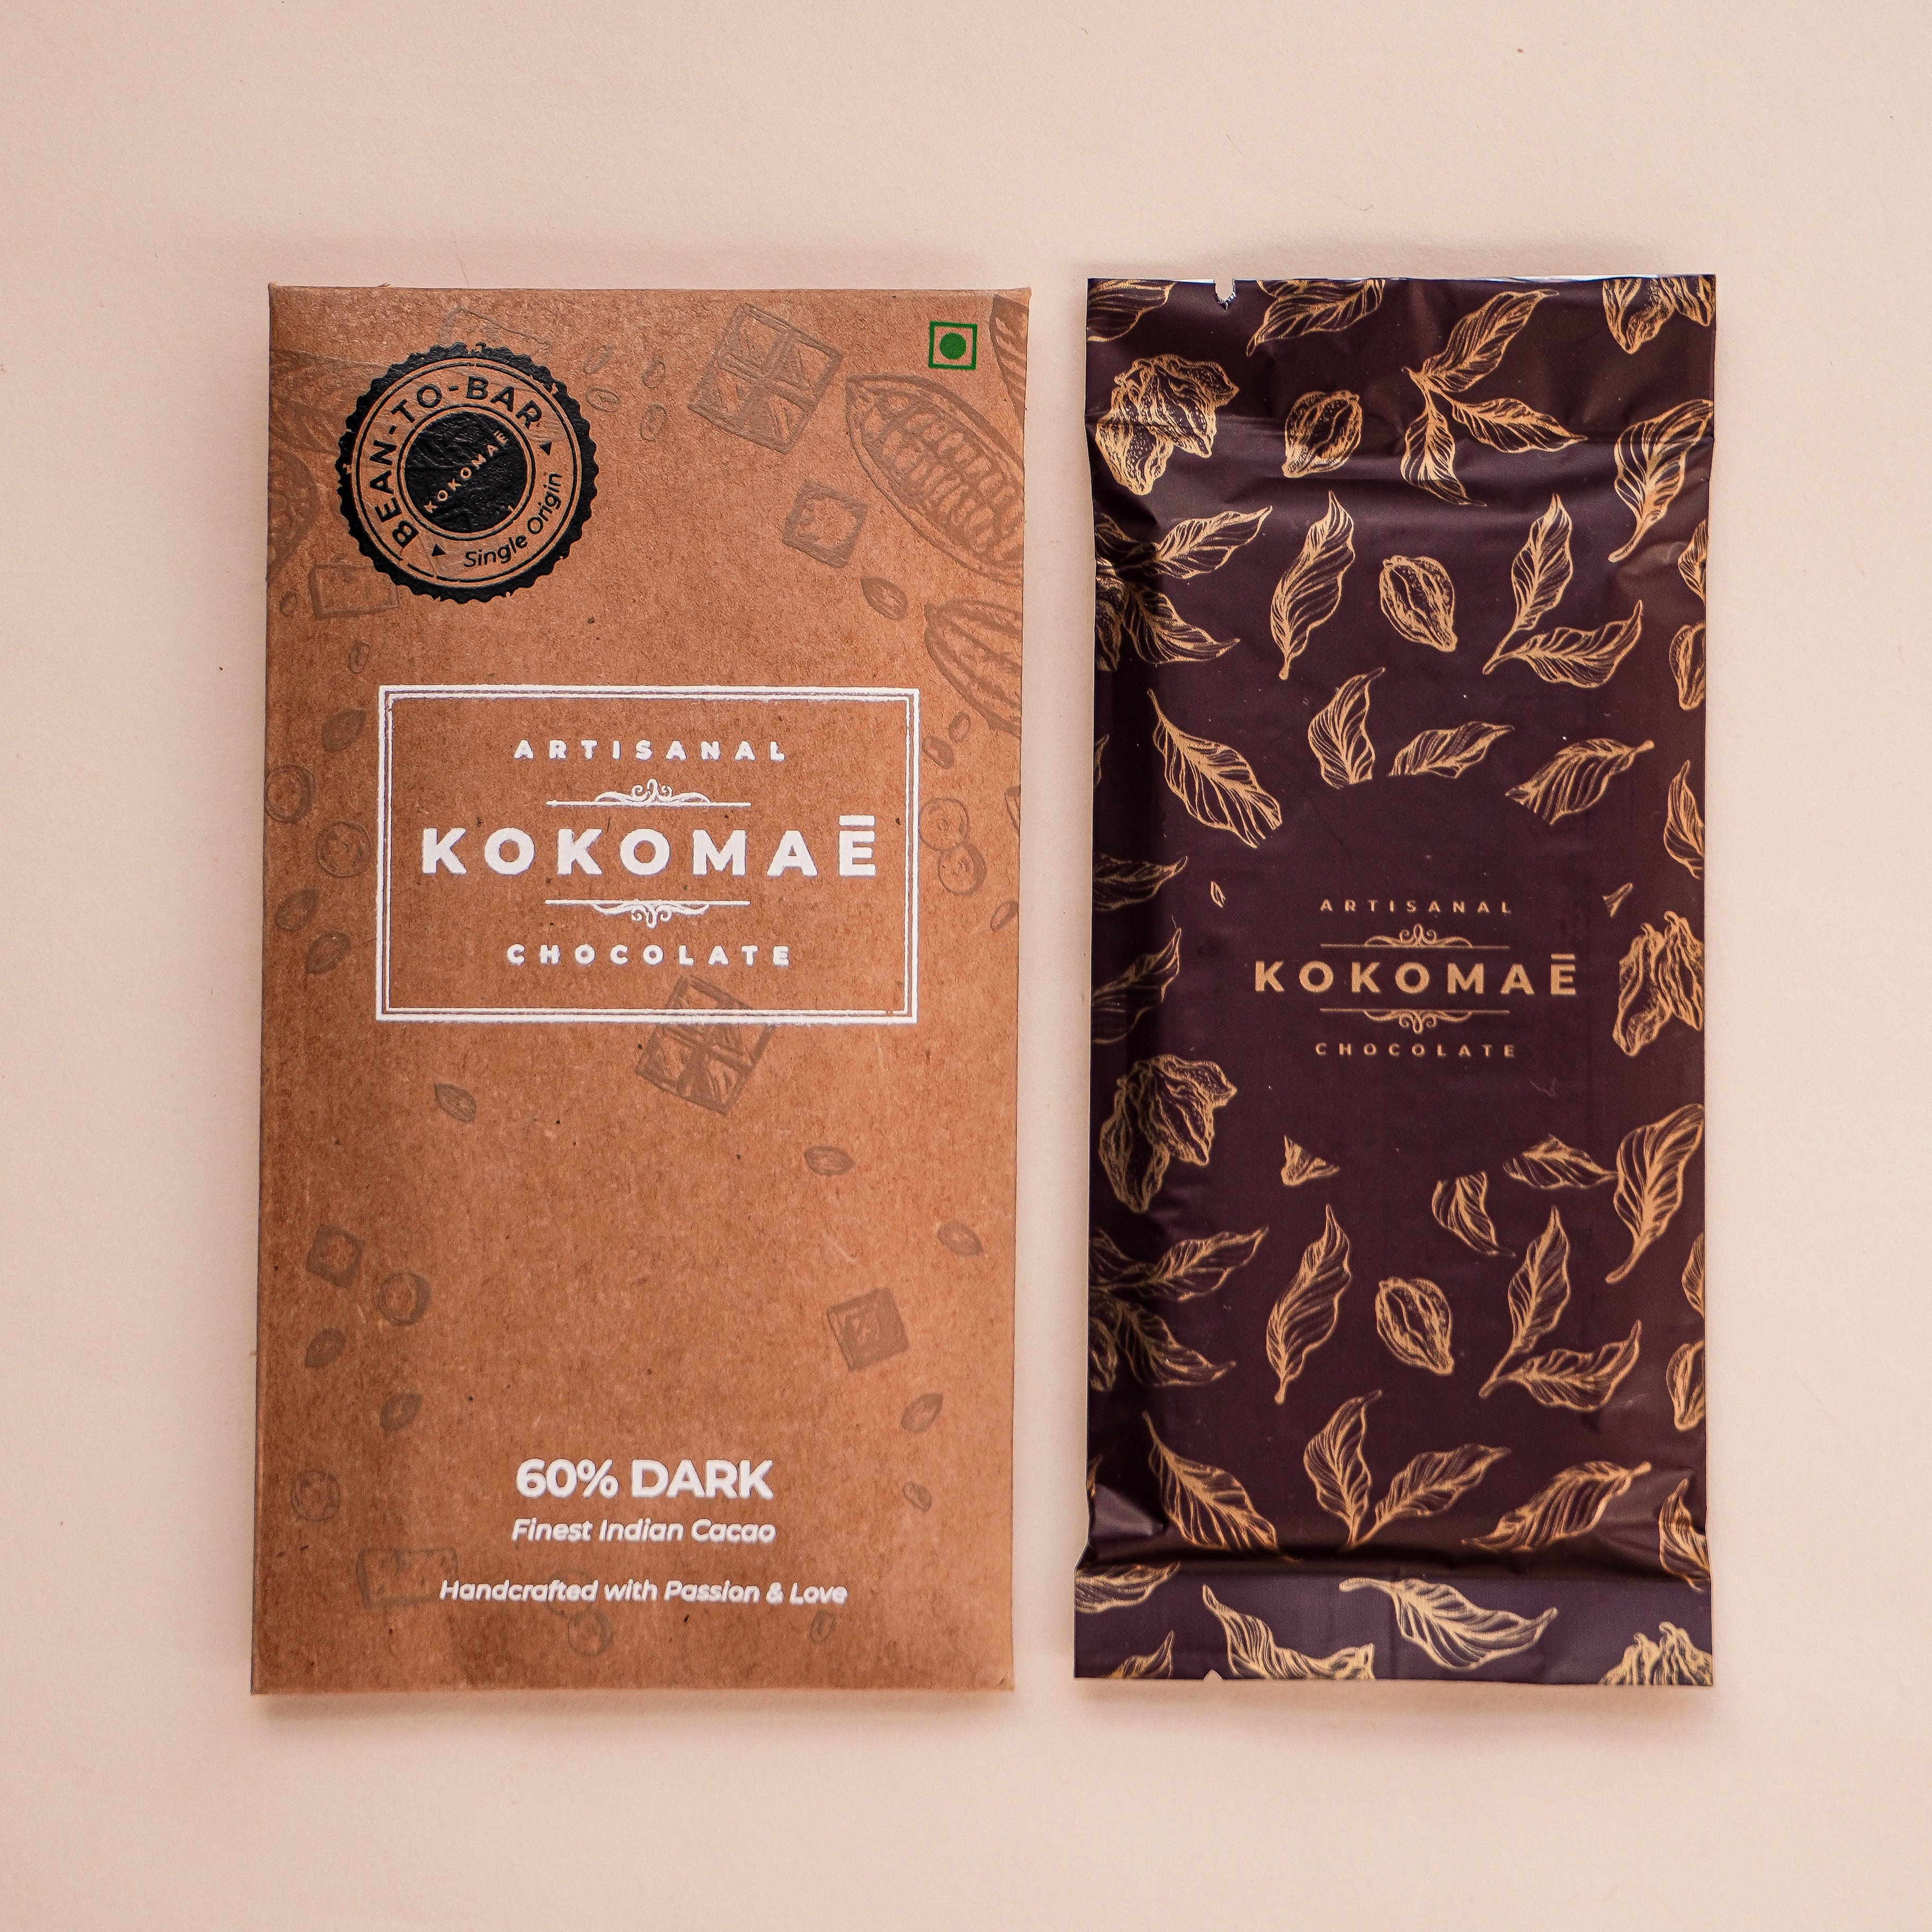 Kokomaē Bean to Bar 60% Organic Dark Chocolate made of Finest Cocoa Beans from Idukki Region